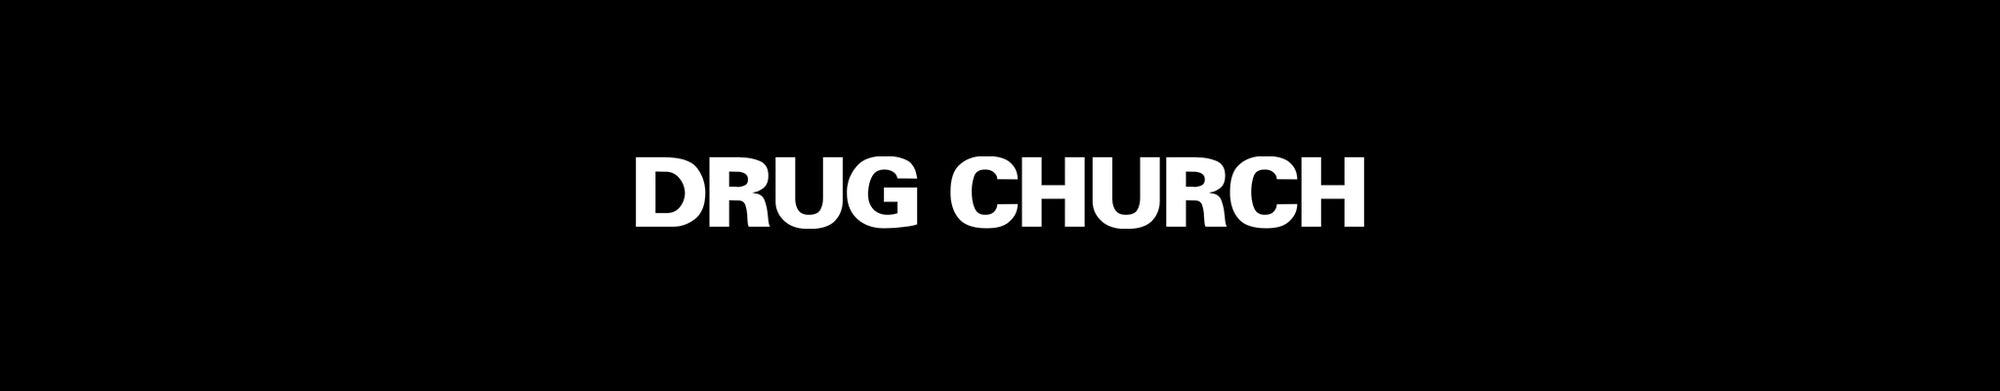 DRUG CHURCH